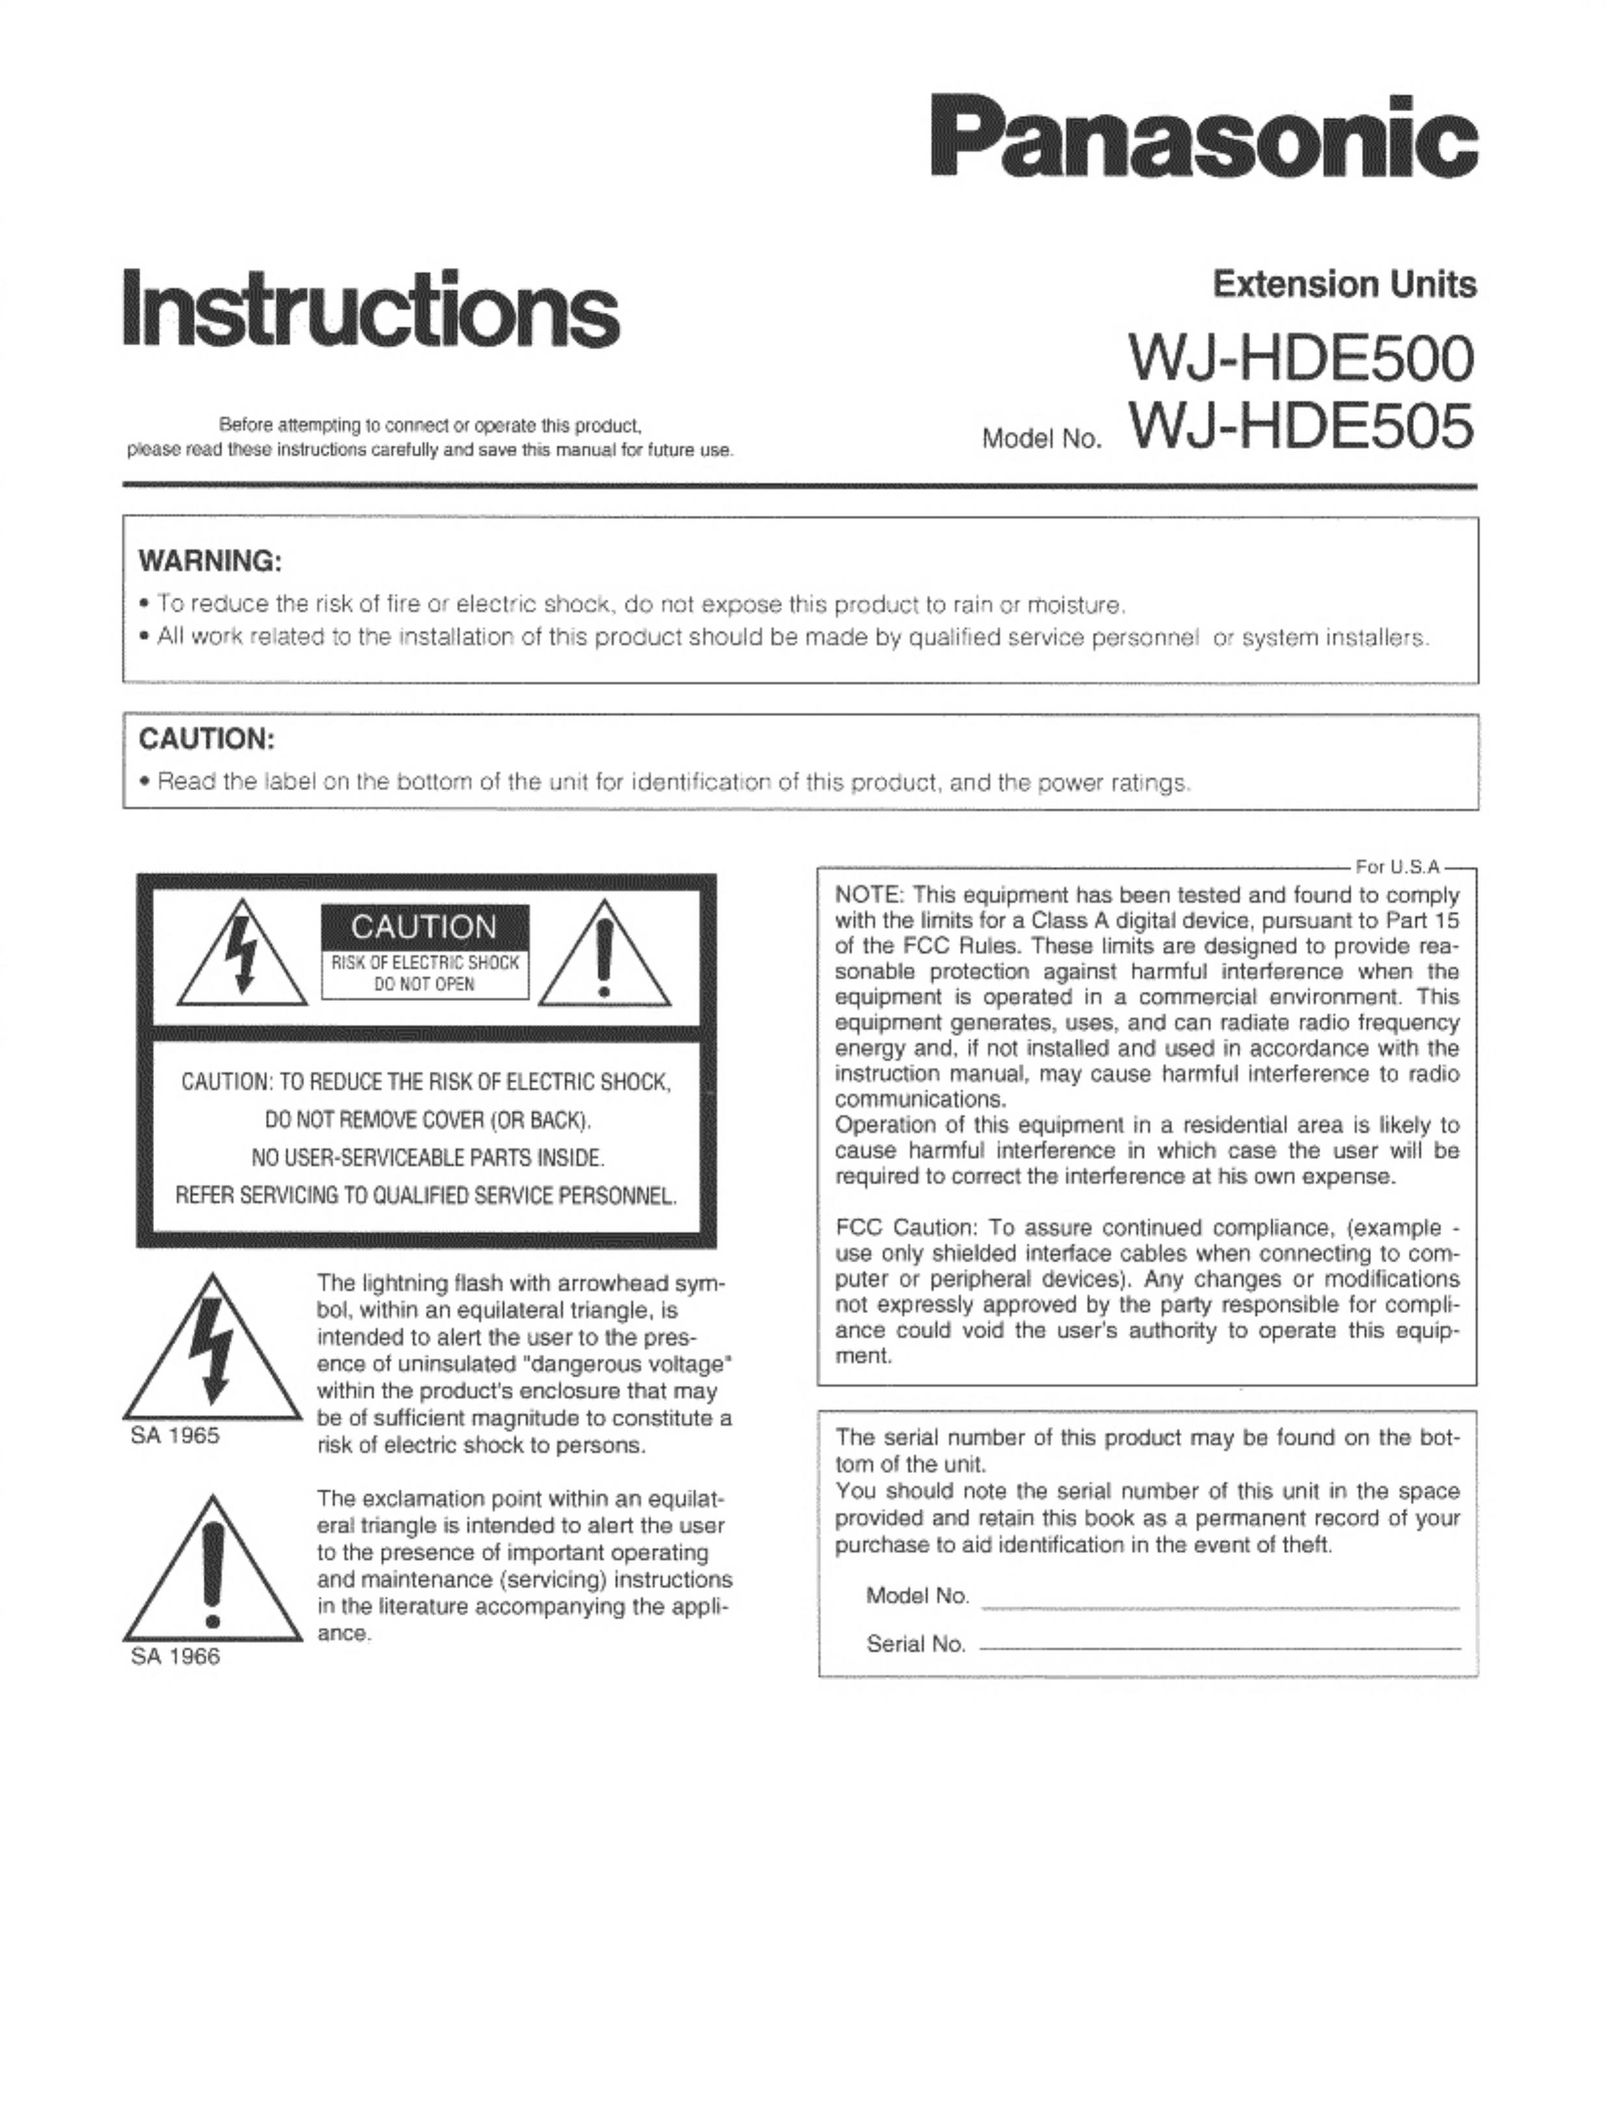 Panasonic WJ-HDE500 Cable Box User Manual (Page 1)